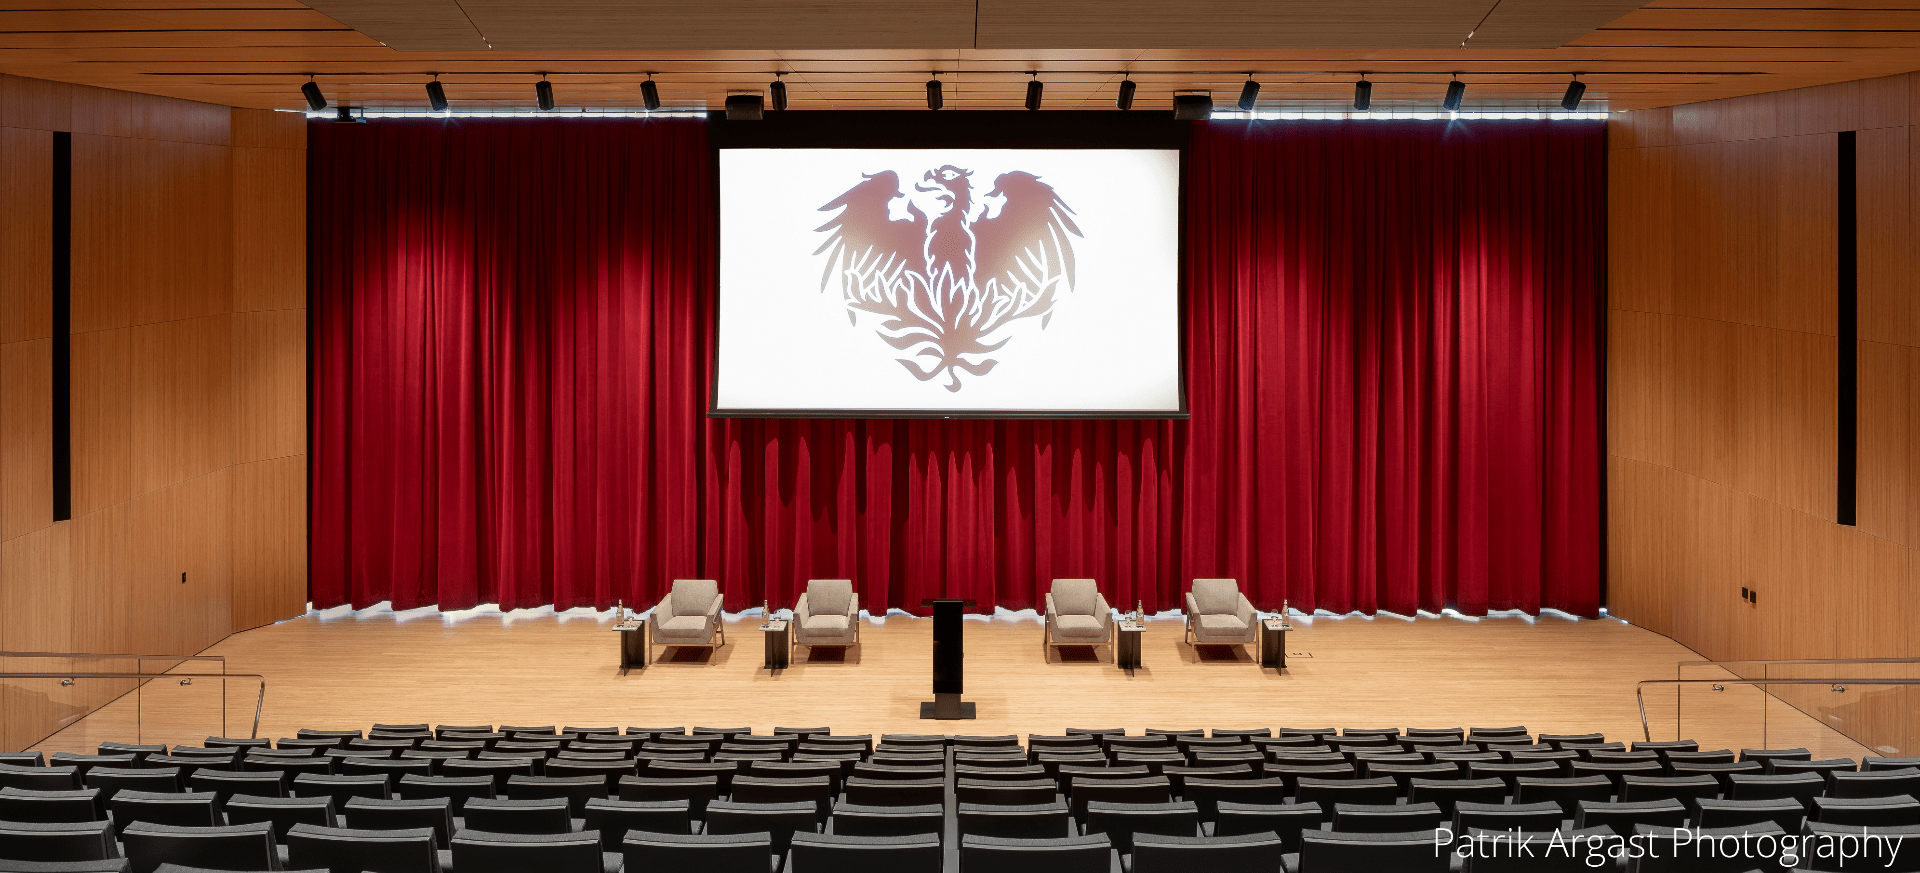 Rubenstein Forum - Friedman Hall with curtain and screen